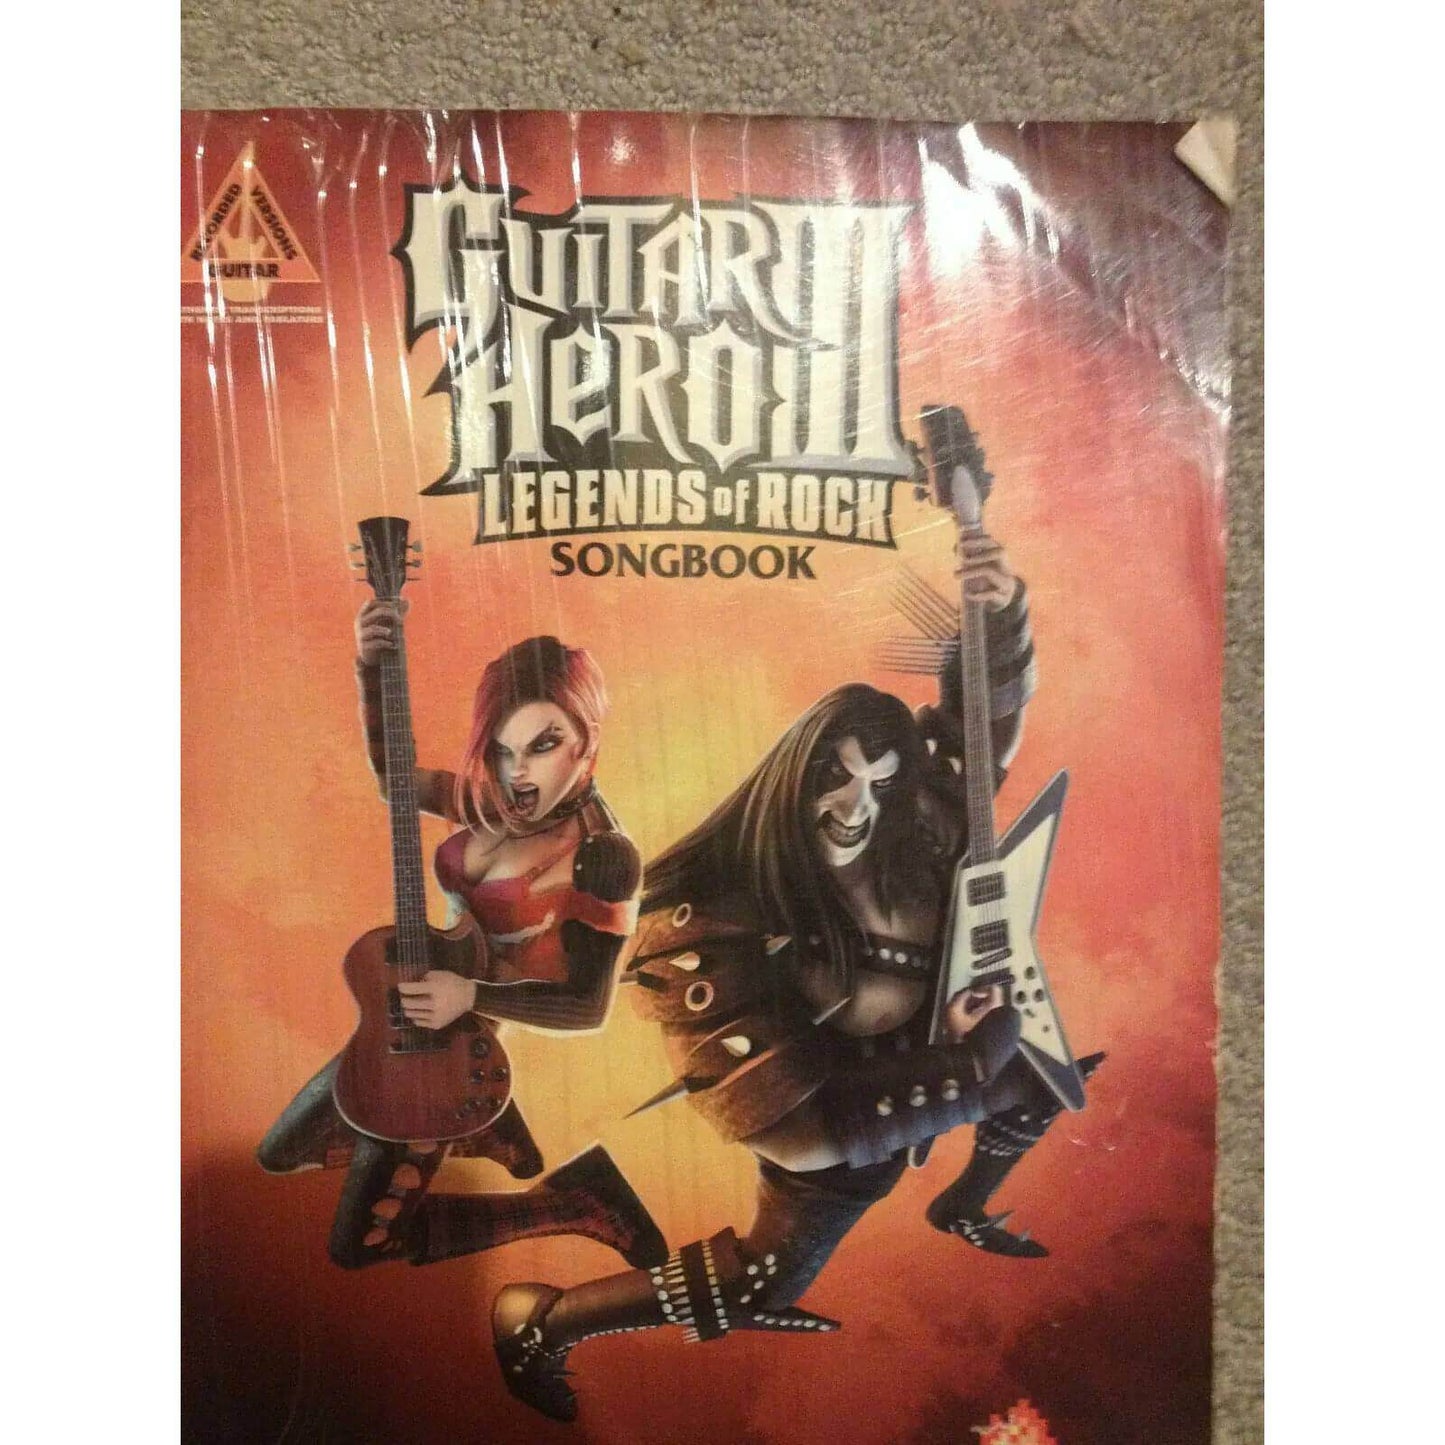 Guitar Hero III + Rockband 2 + AC/DC [Guitar Tab] BooksCardsNBikes